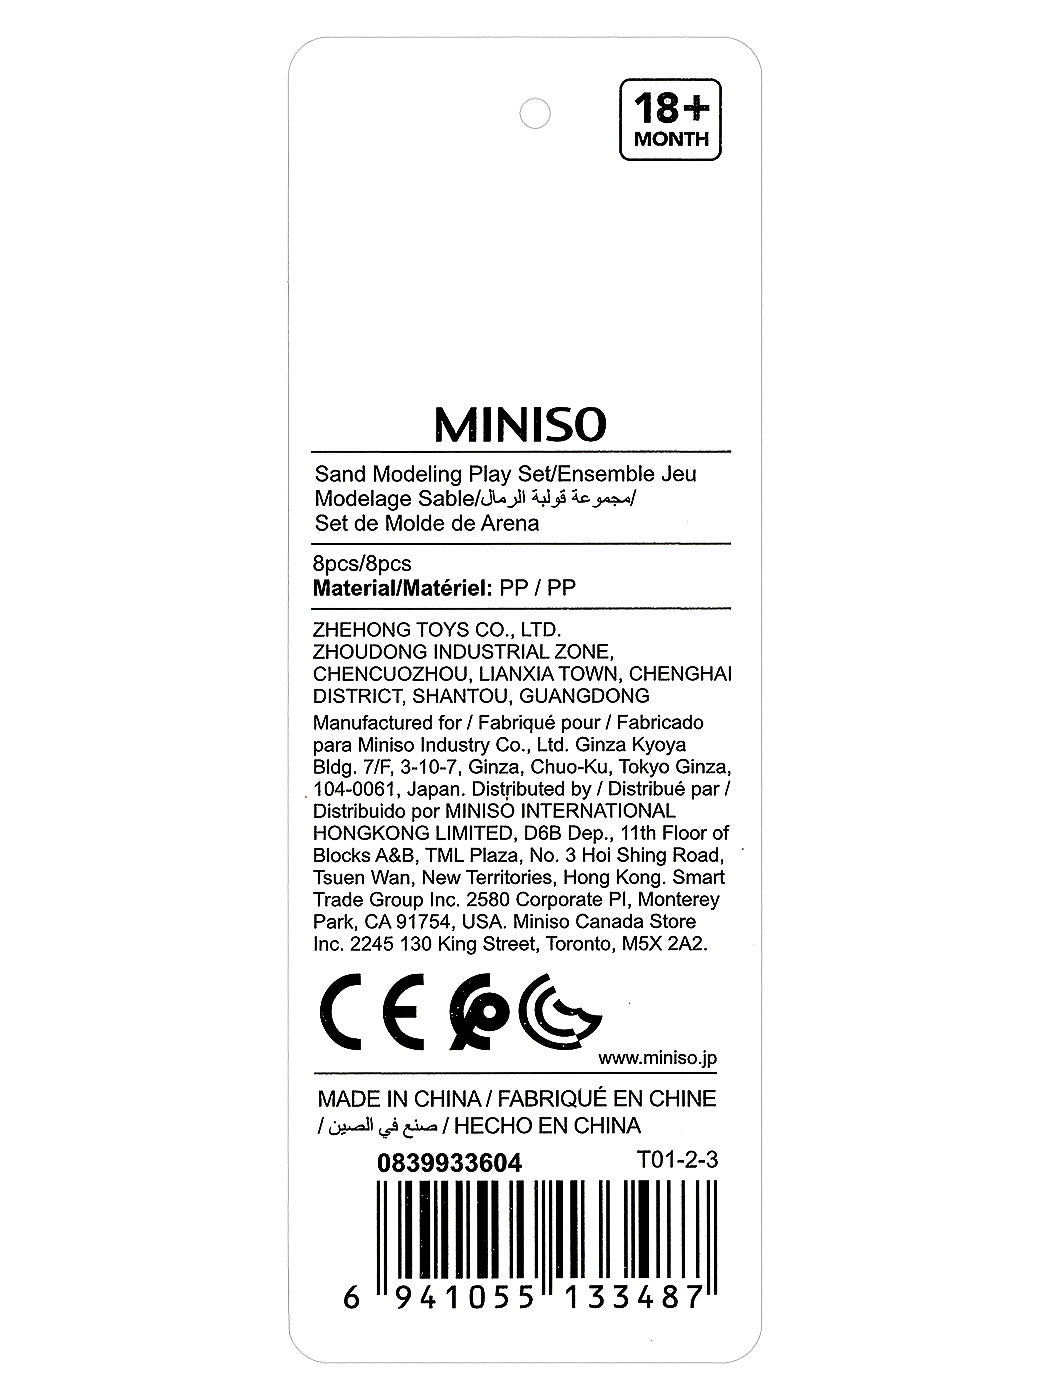 MINISO SAND MODELING PLAY SET 2007965810109 SAND TOYS